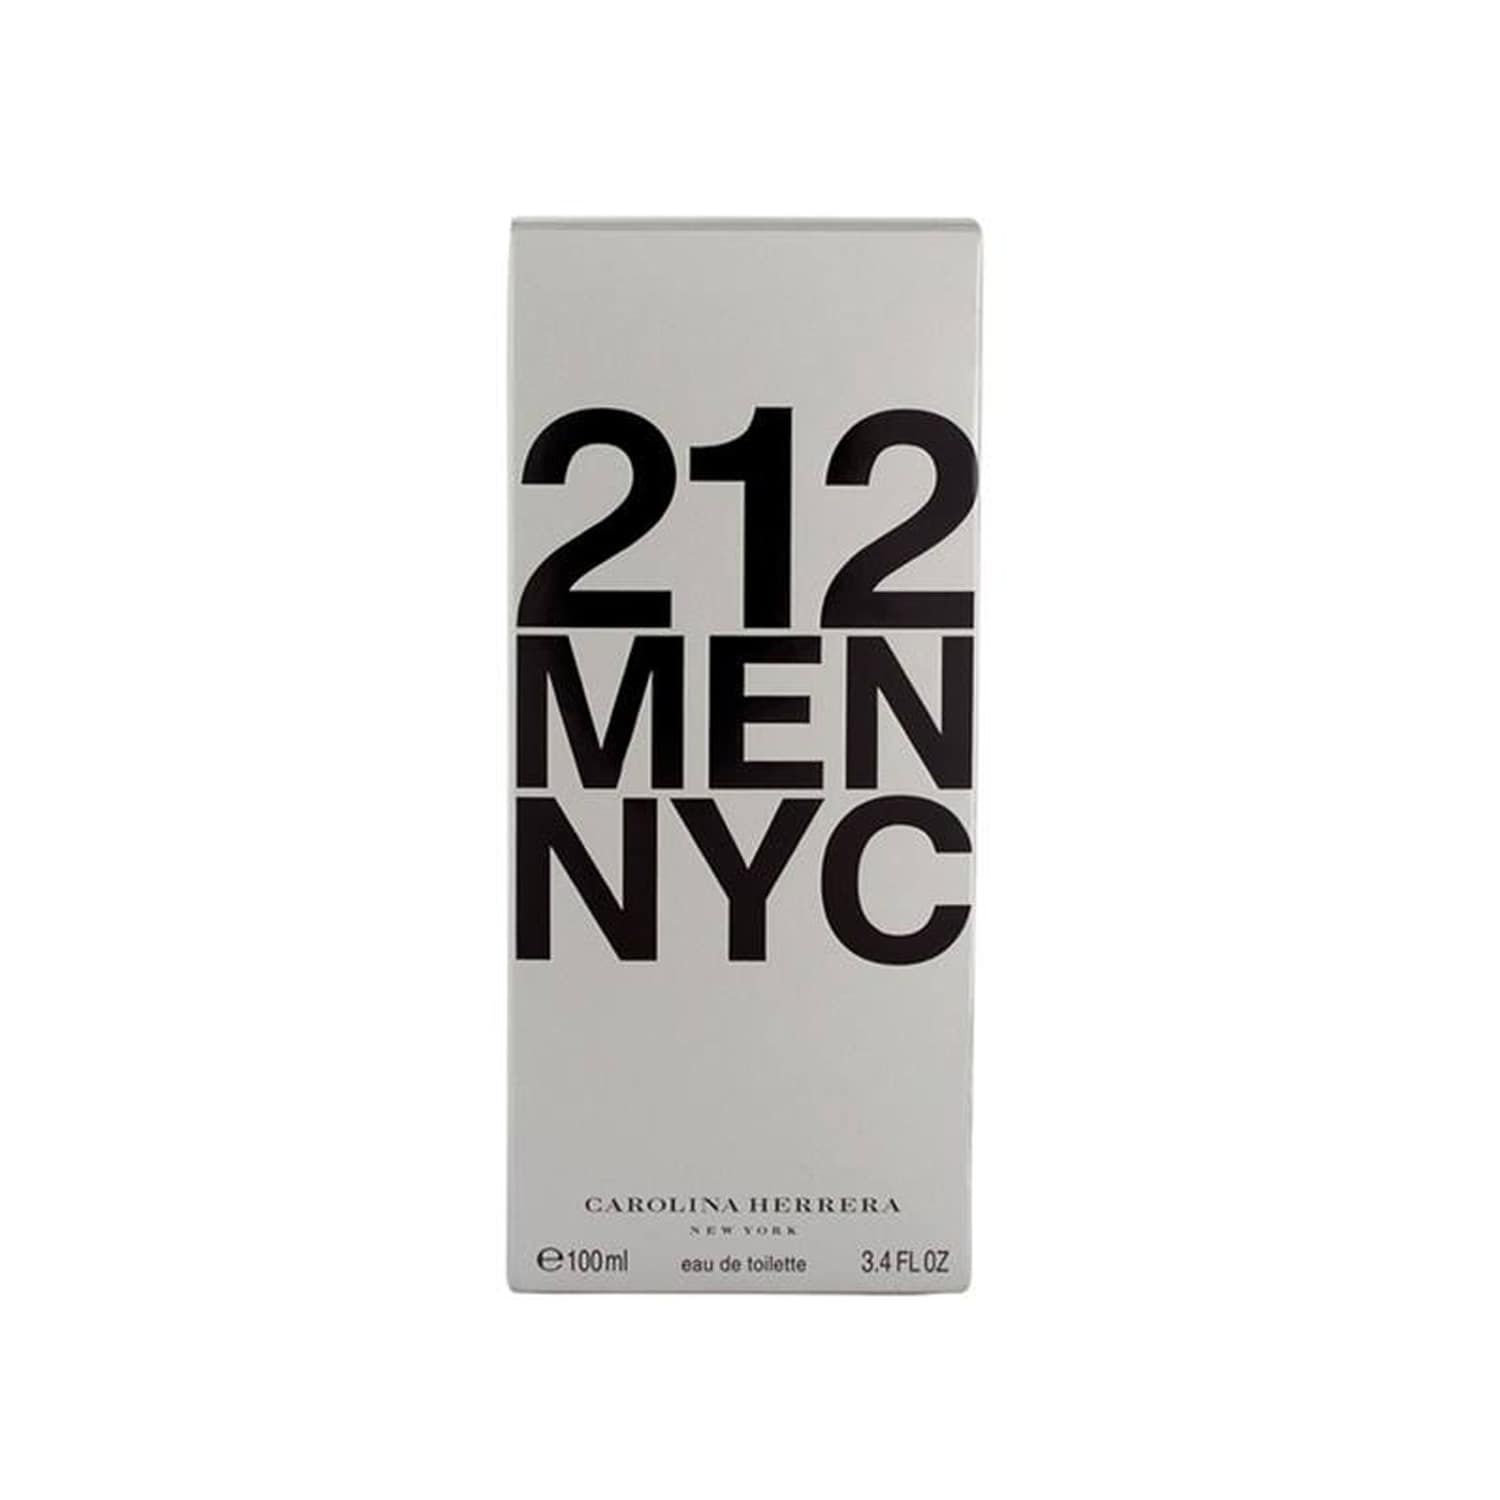 ادوتویلت مردانه کارولینا هررا مدل 212Men NYC حجم 100 میلی لیتر